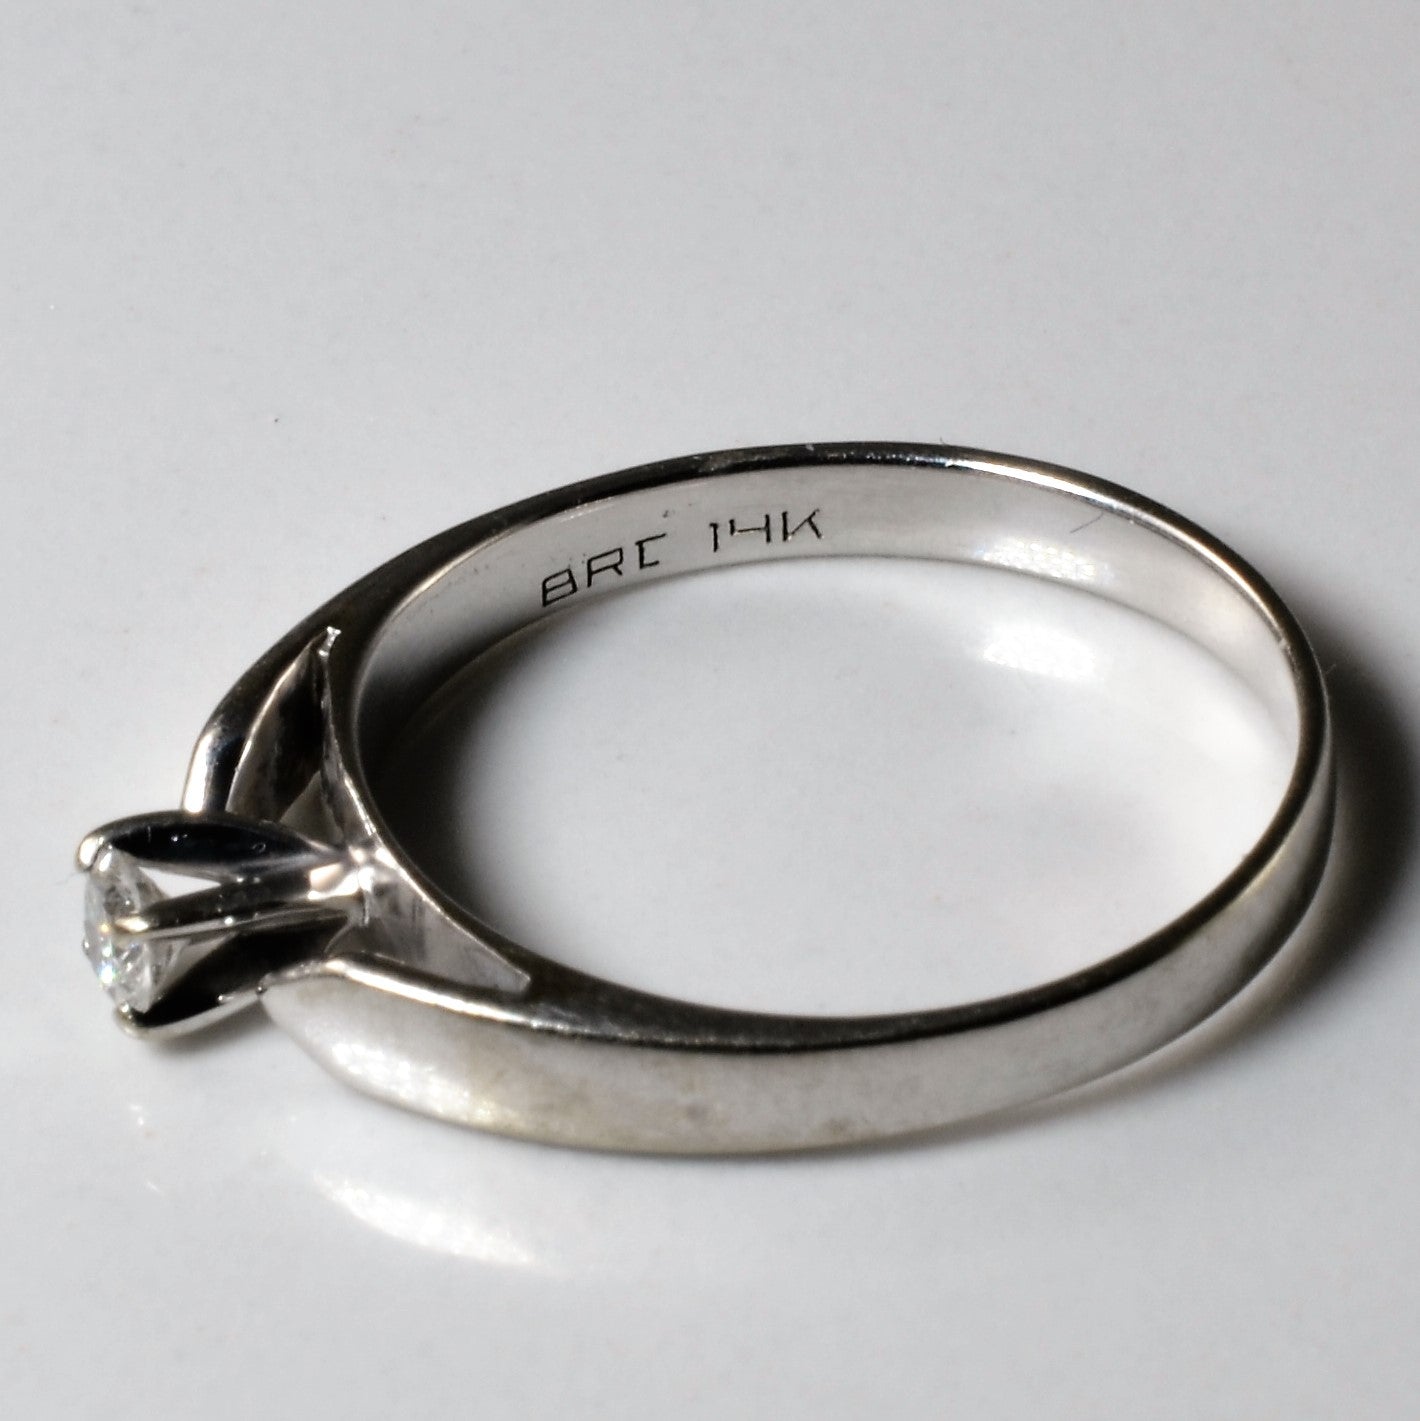 White Gold Solitaire Diamond Ring | 0.09ct | SZ 5.75 |